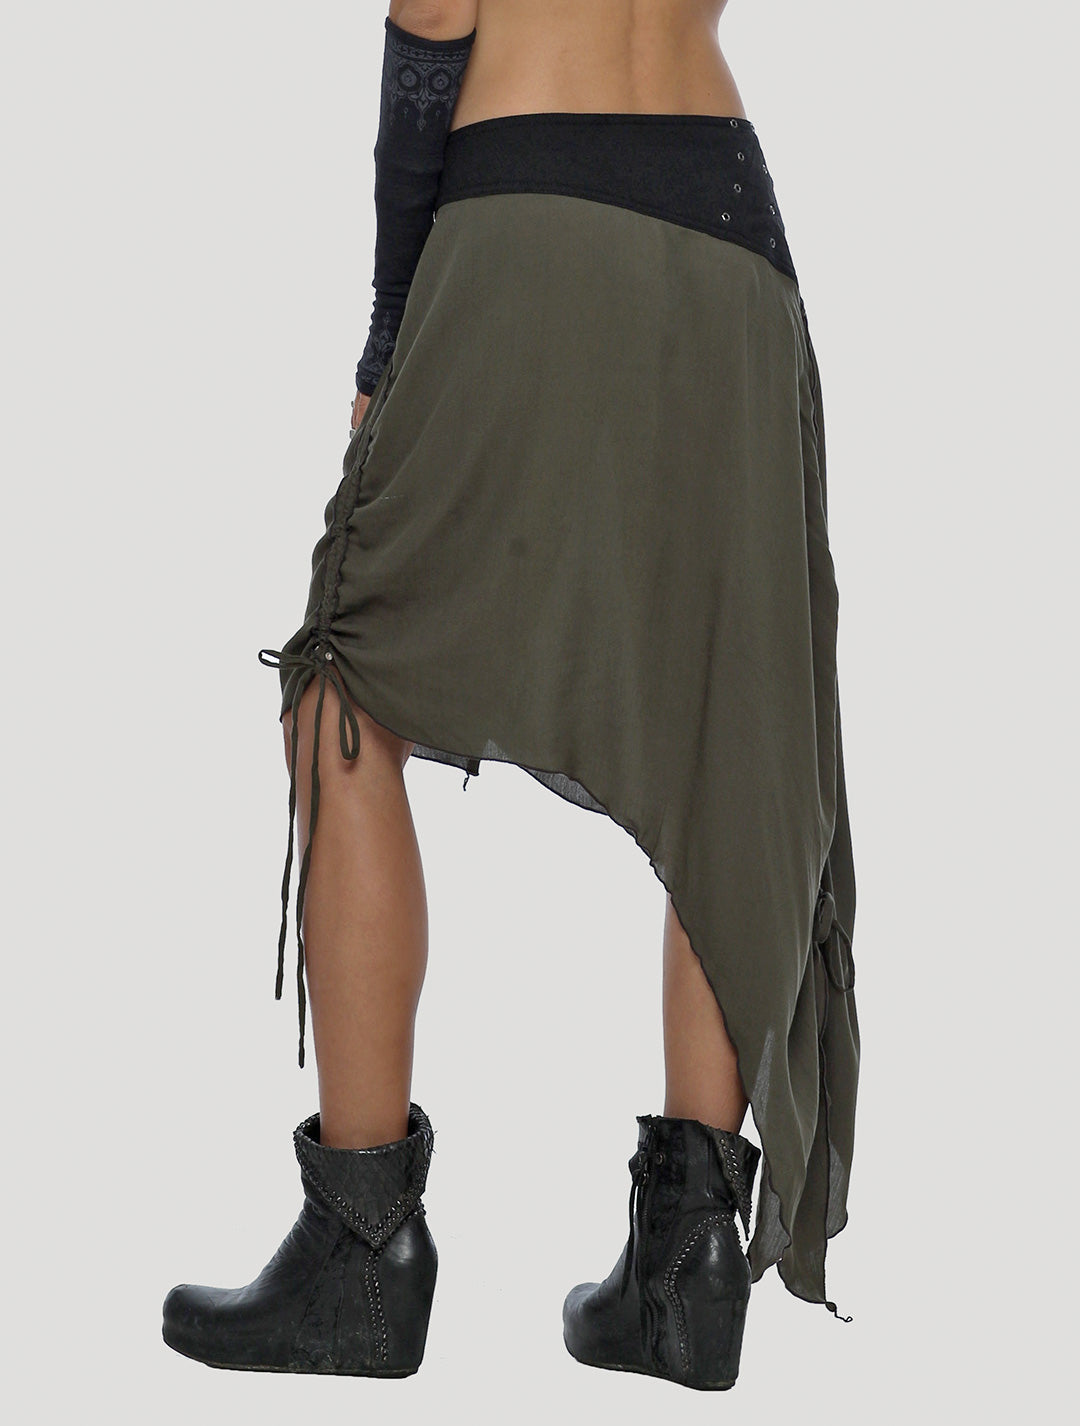 N-Gal Women Lycra Leaf Printed Skorts Mini Skirt with Attached